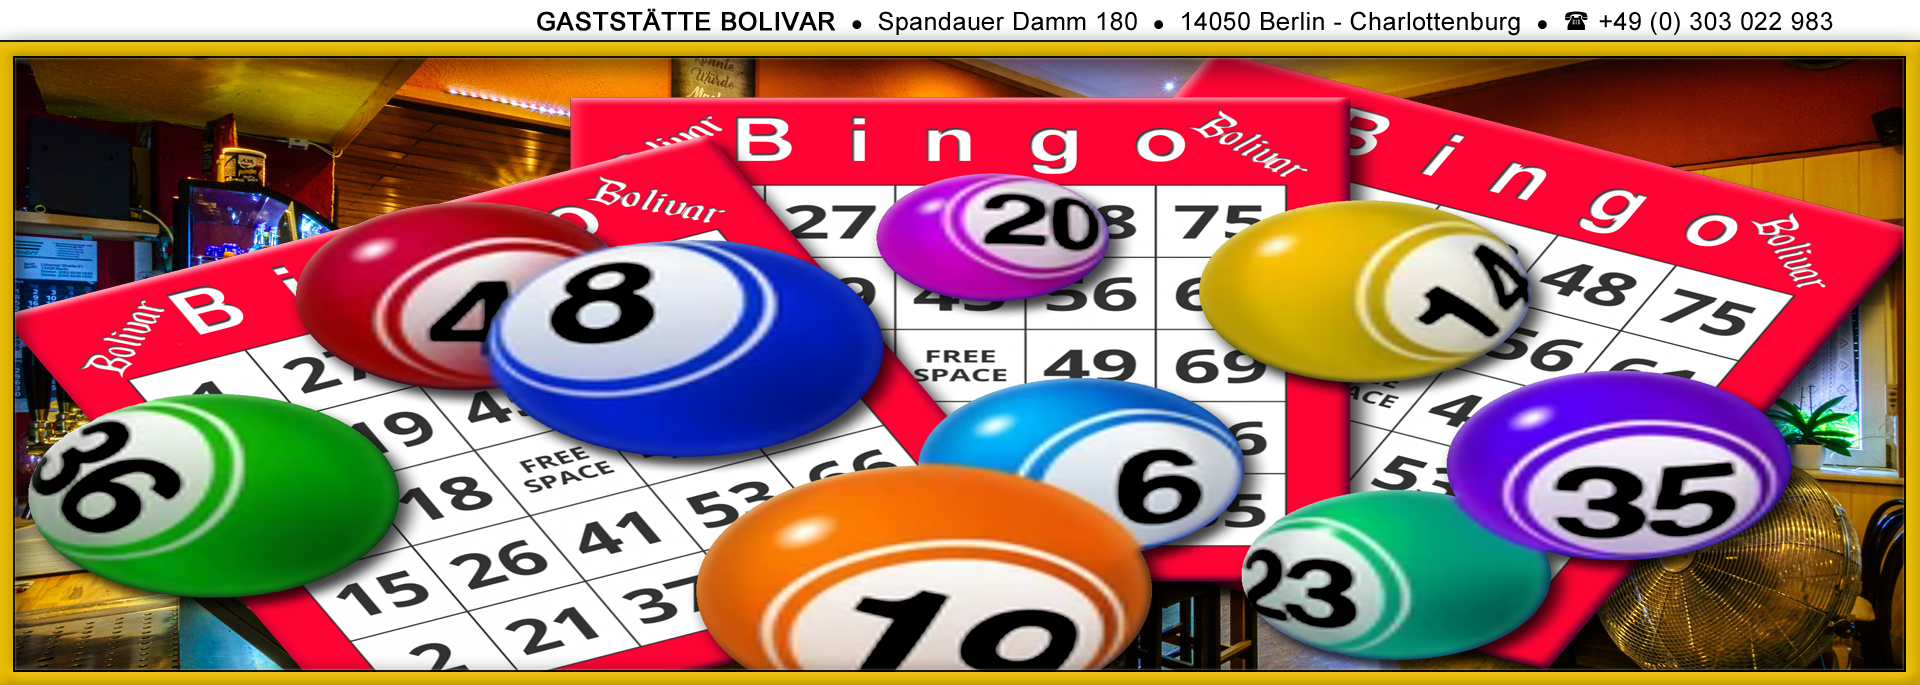 bolivar-berlin-charlottenburg-westend-bingo-02